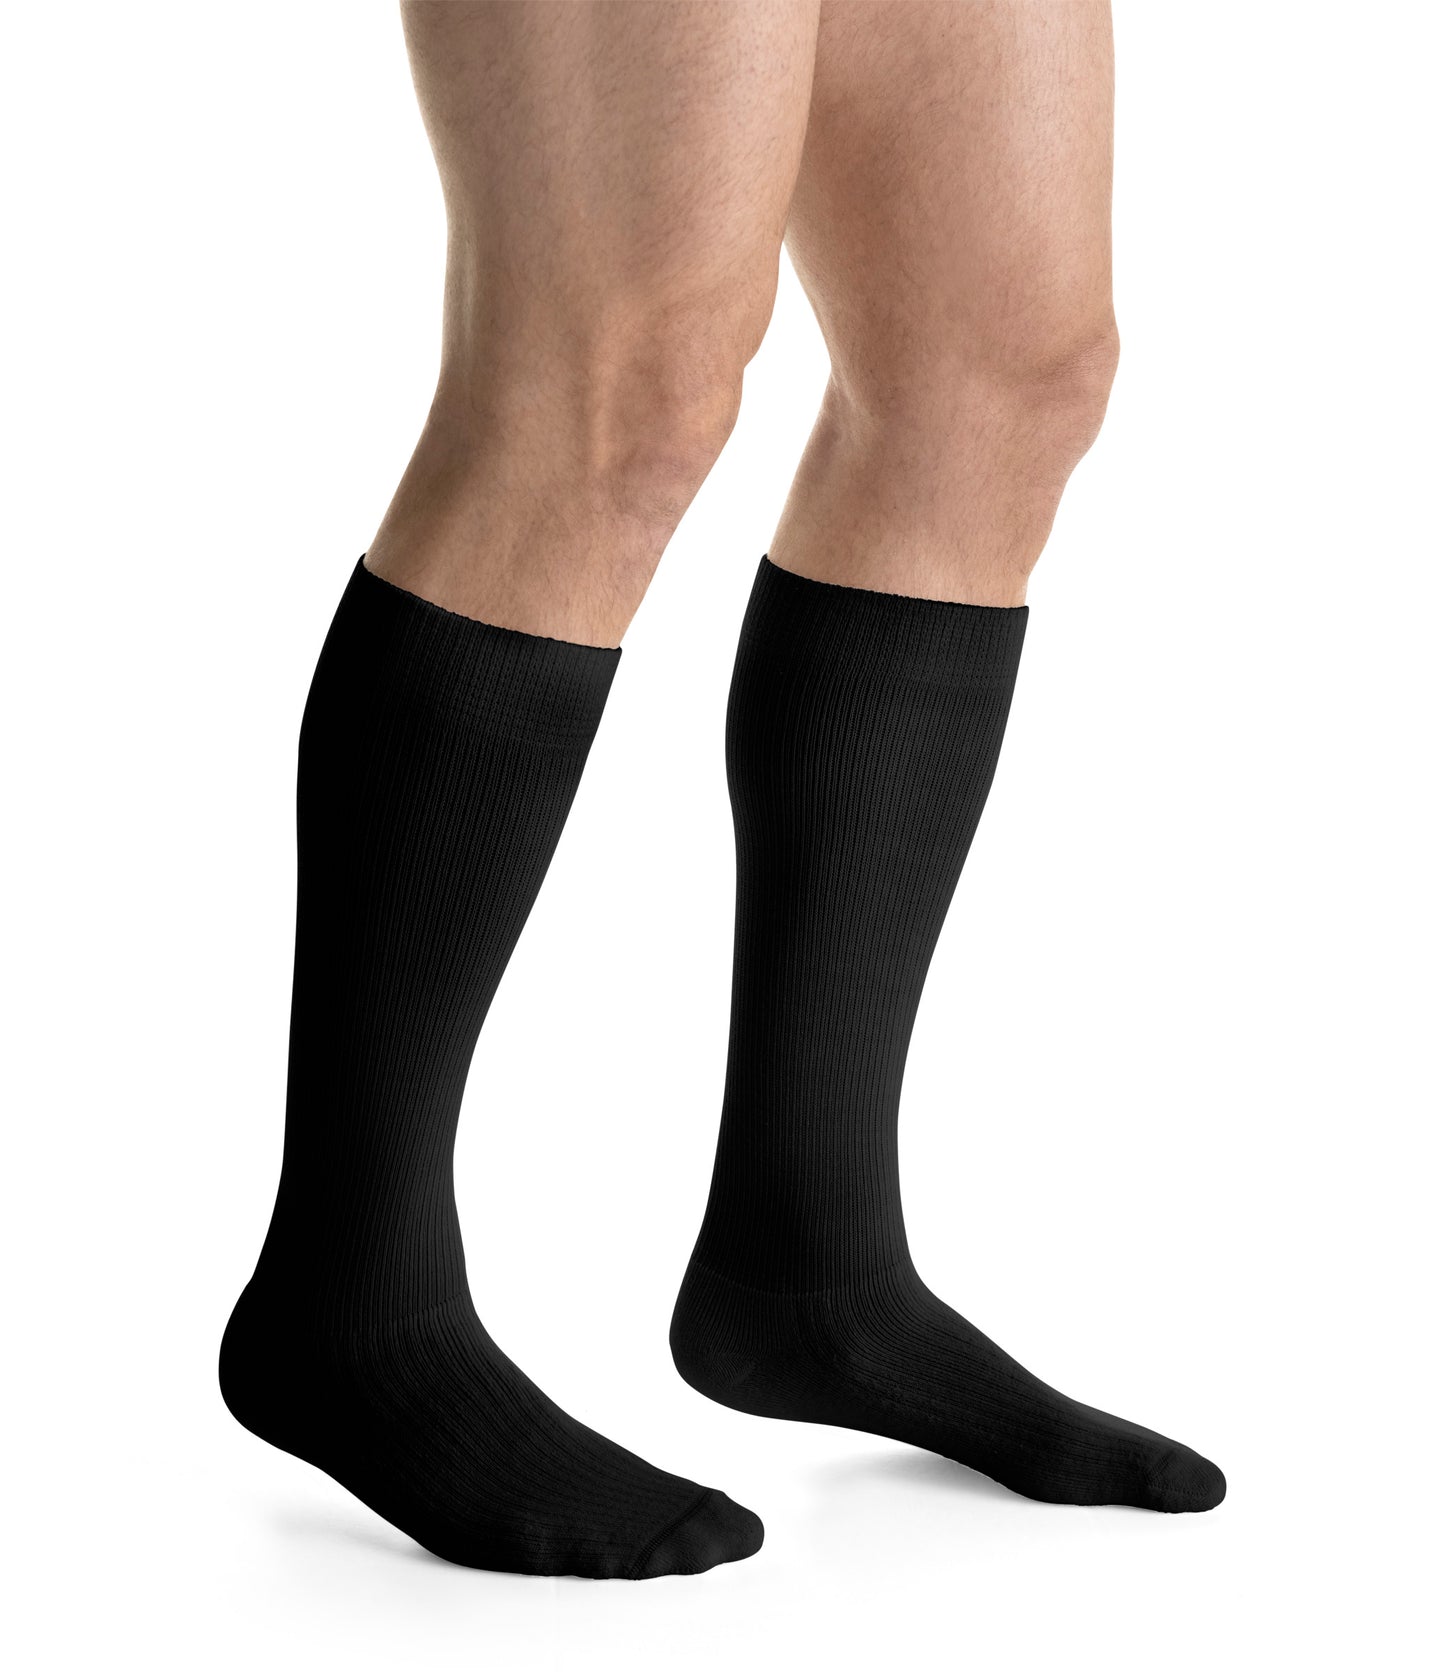 JOBST ActiveWear Compression Socks 15-20 mmHg Knee High Closed Toe